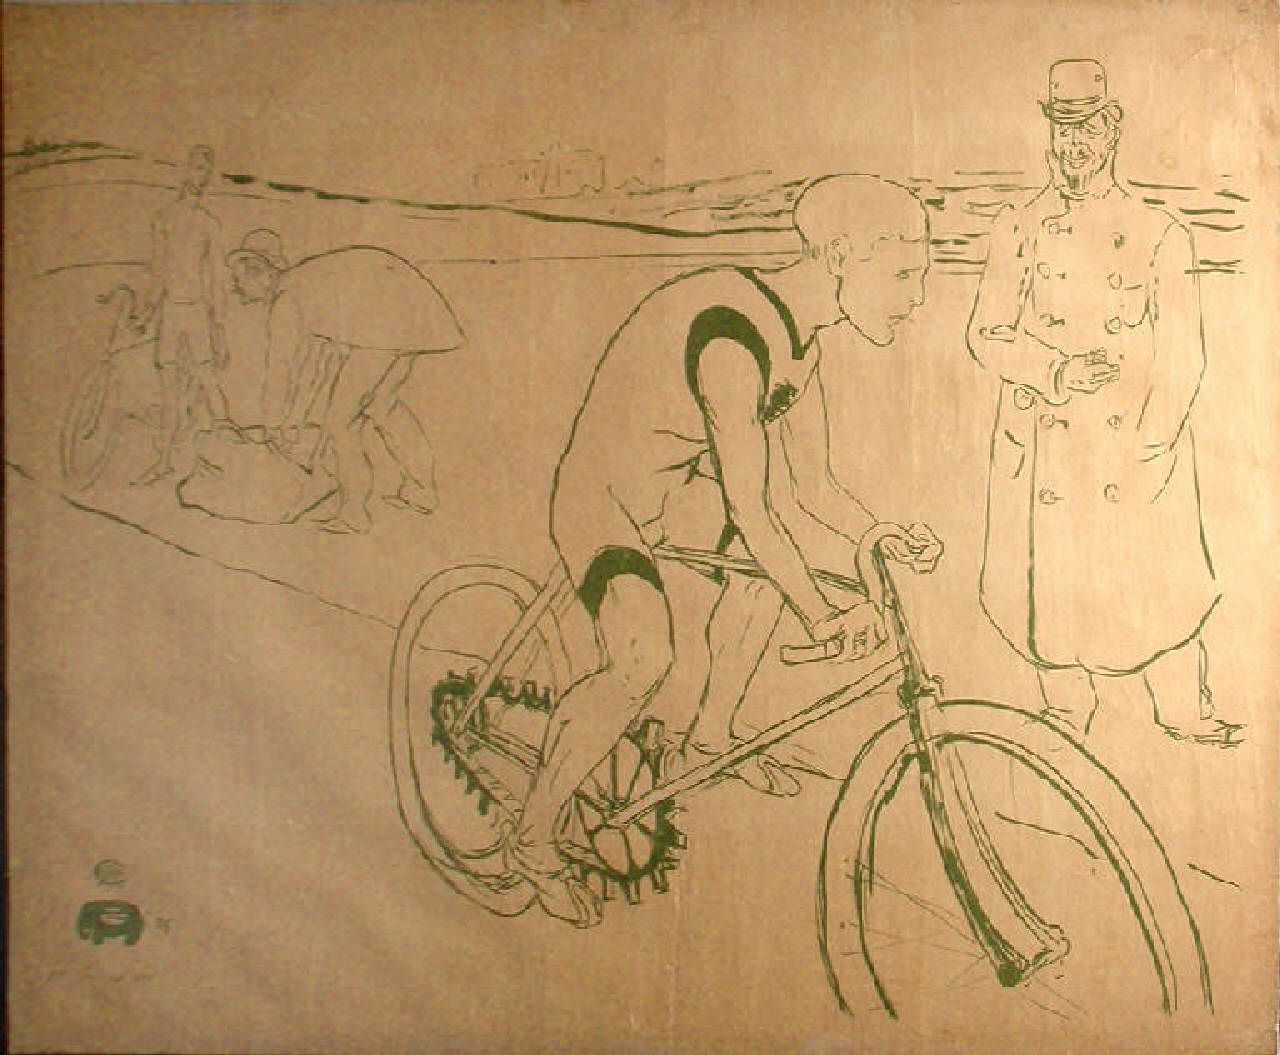 Cycle Mickael, cycle mickael (manifesto) di De Toulouse-Lautrec-Monfa Henri Marie Raymond (sec. XIX)